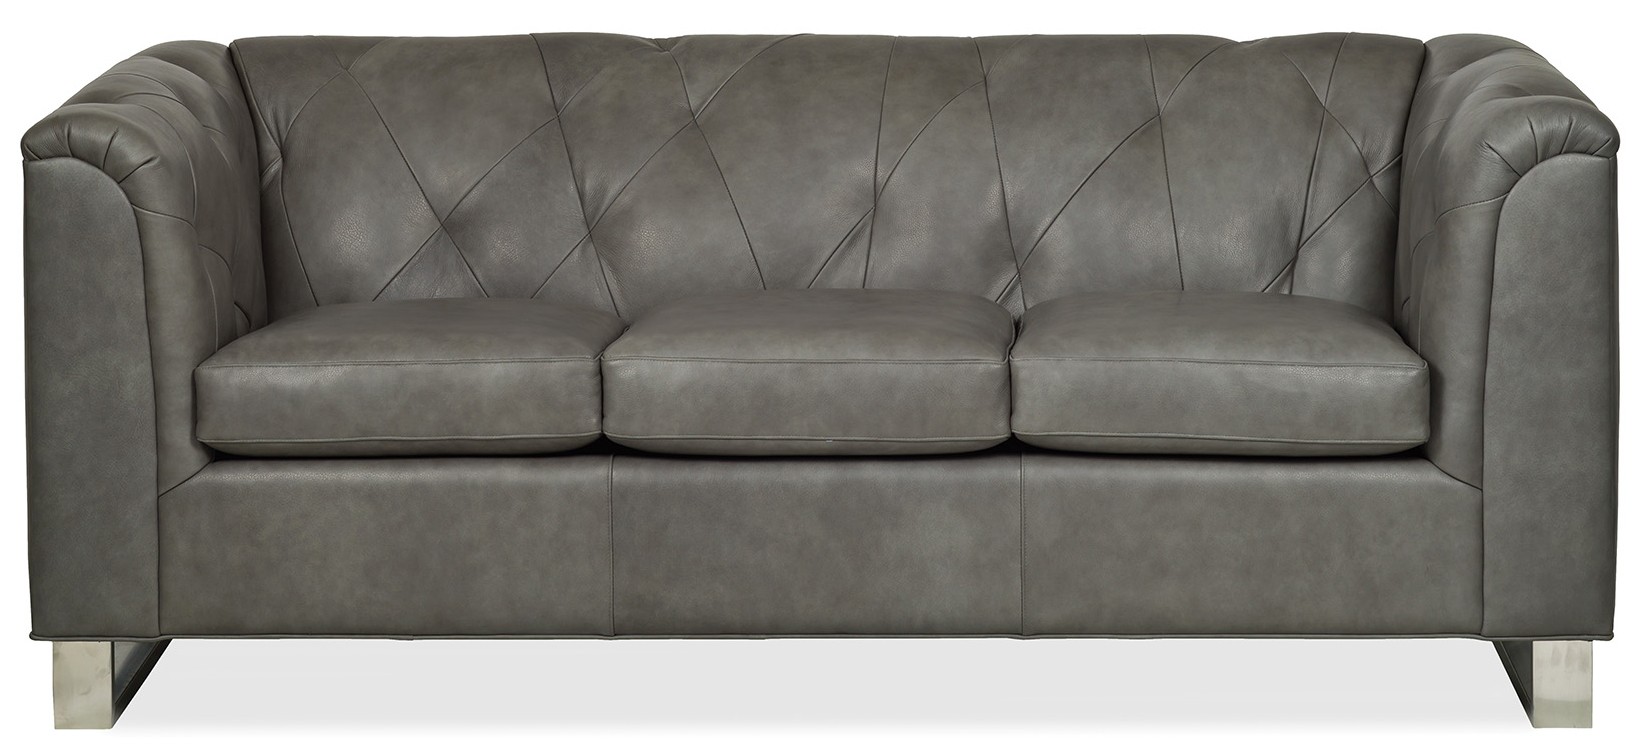 dove grey leather corner sofa